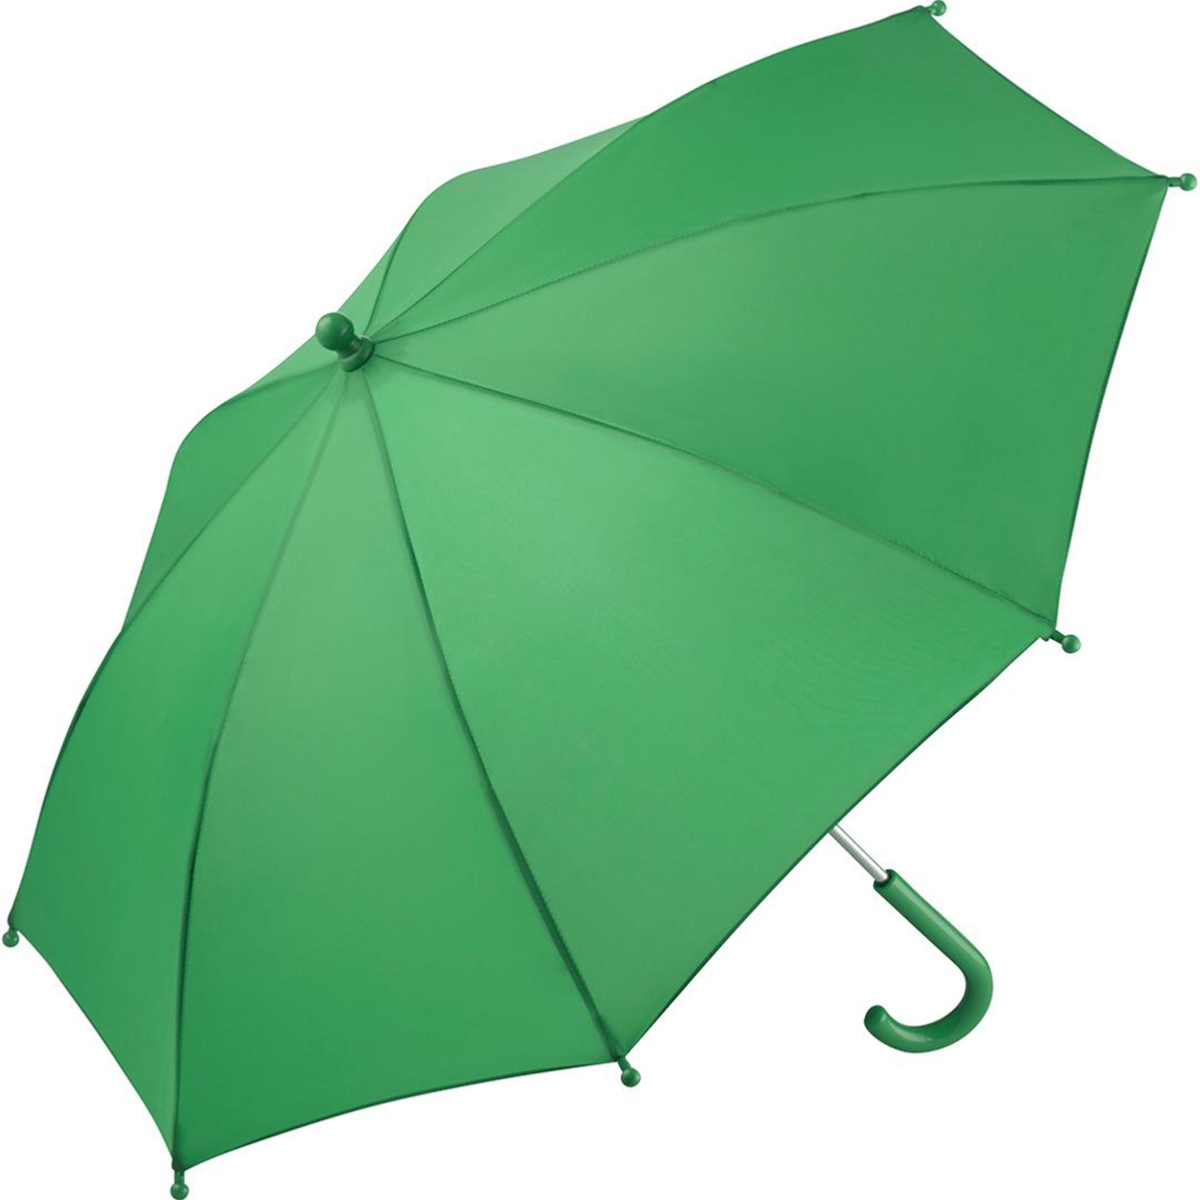 Performance Range Children's Walking Length Umbrella by Fare - Green